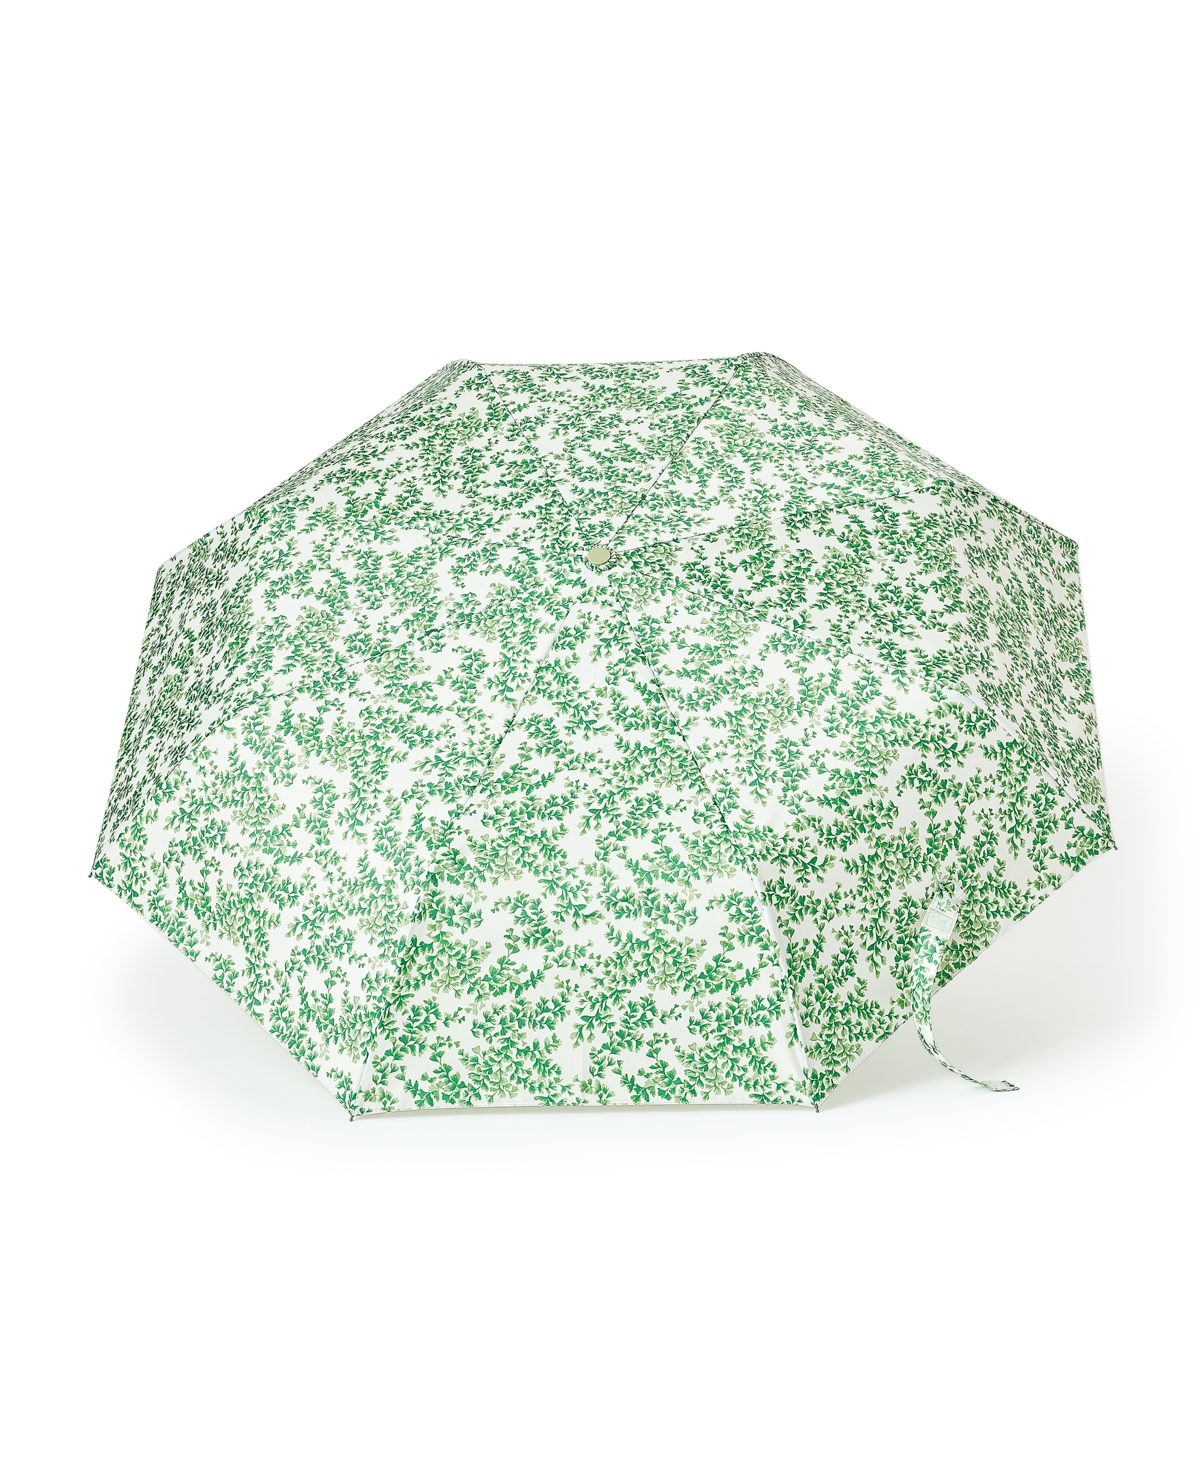 Flower Show Auto Folding Umbrella, Created for Macy's - Green Leaf